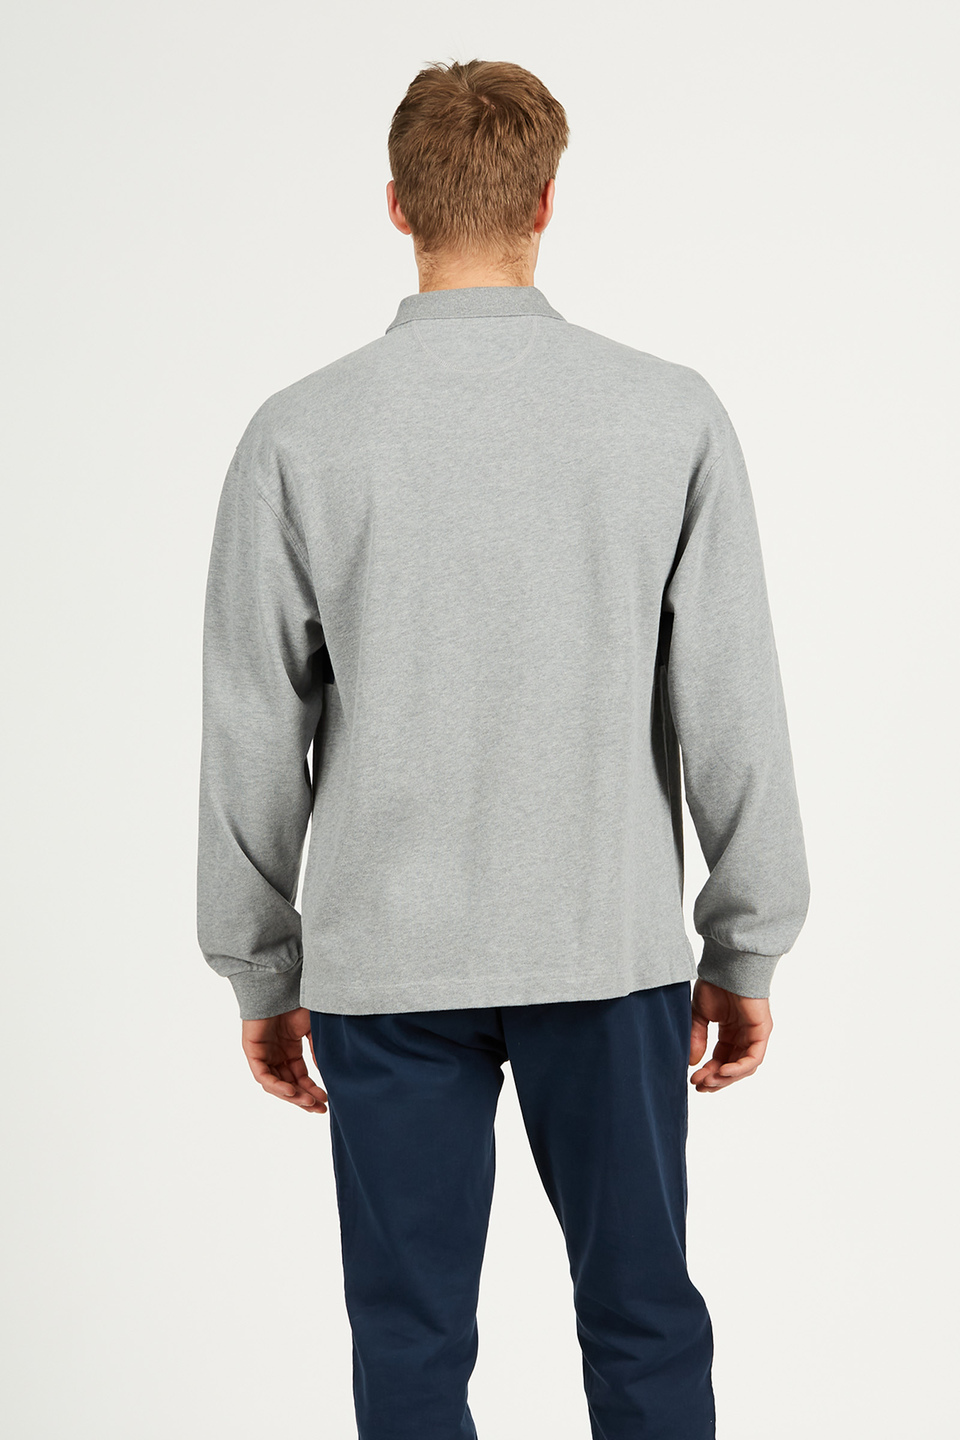 Langärmeliges Herren-Poloshirt aus 100 % Baumwolle Comfort Fit | La Martina - Official Online Shop